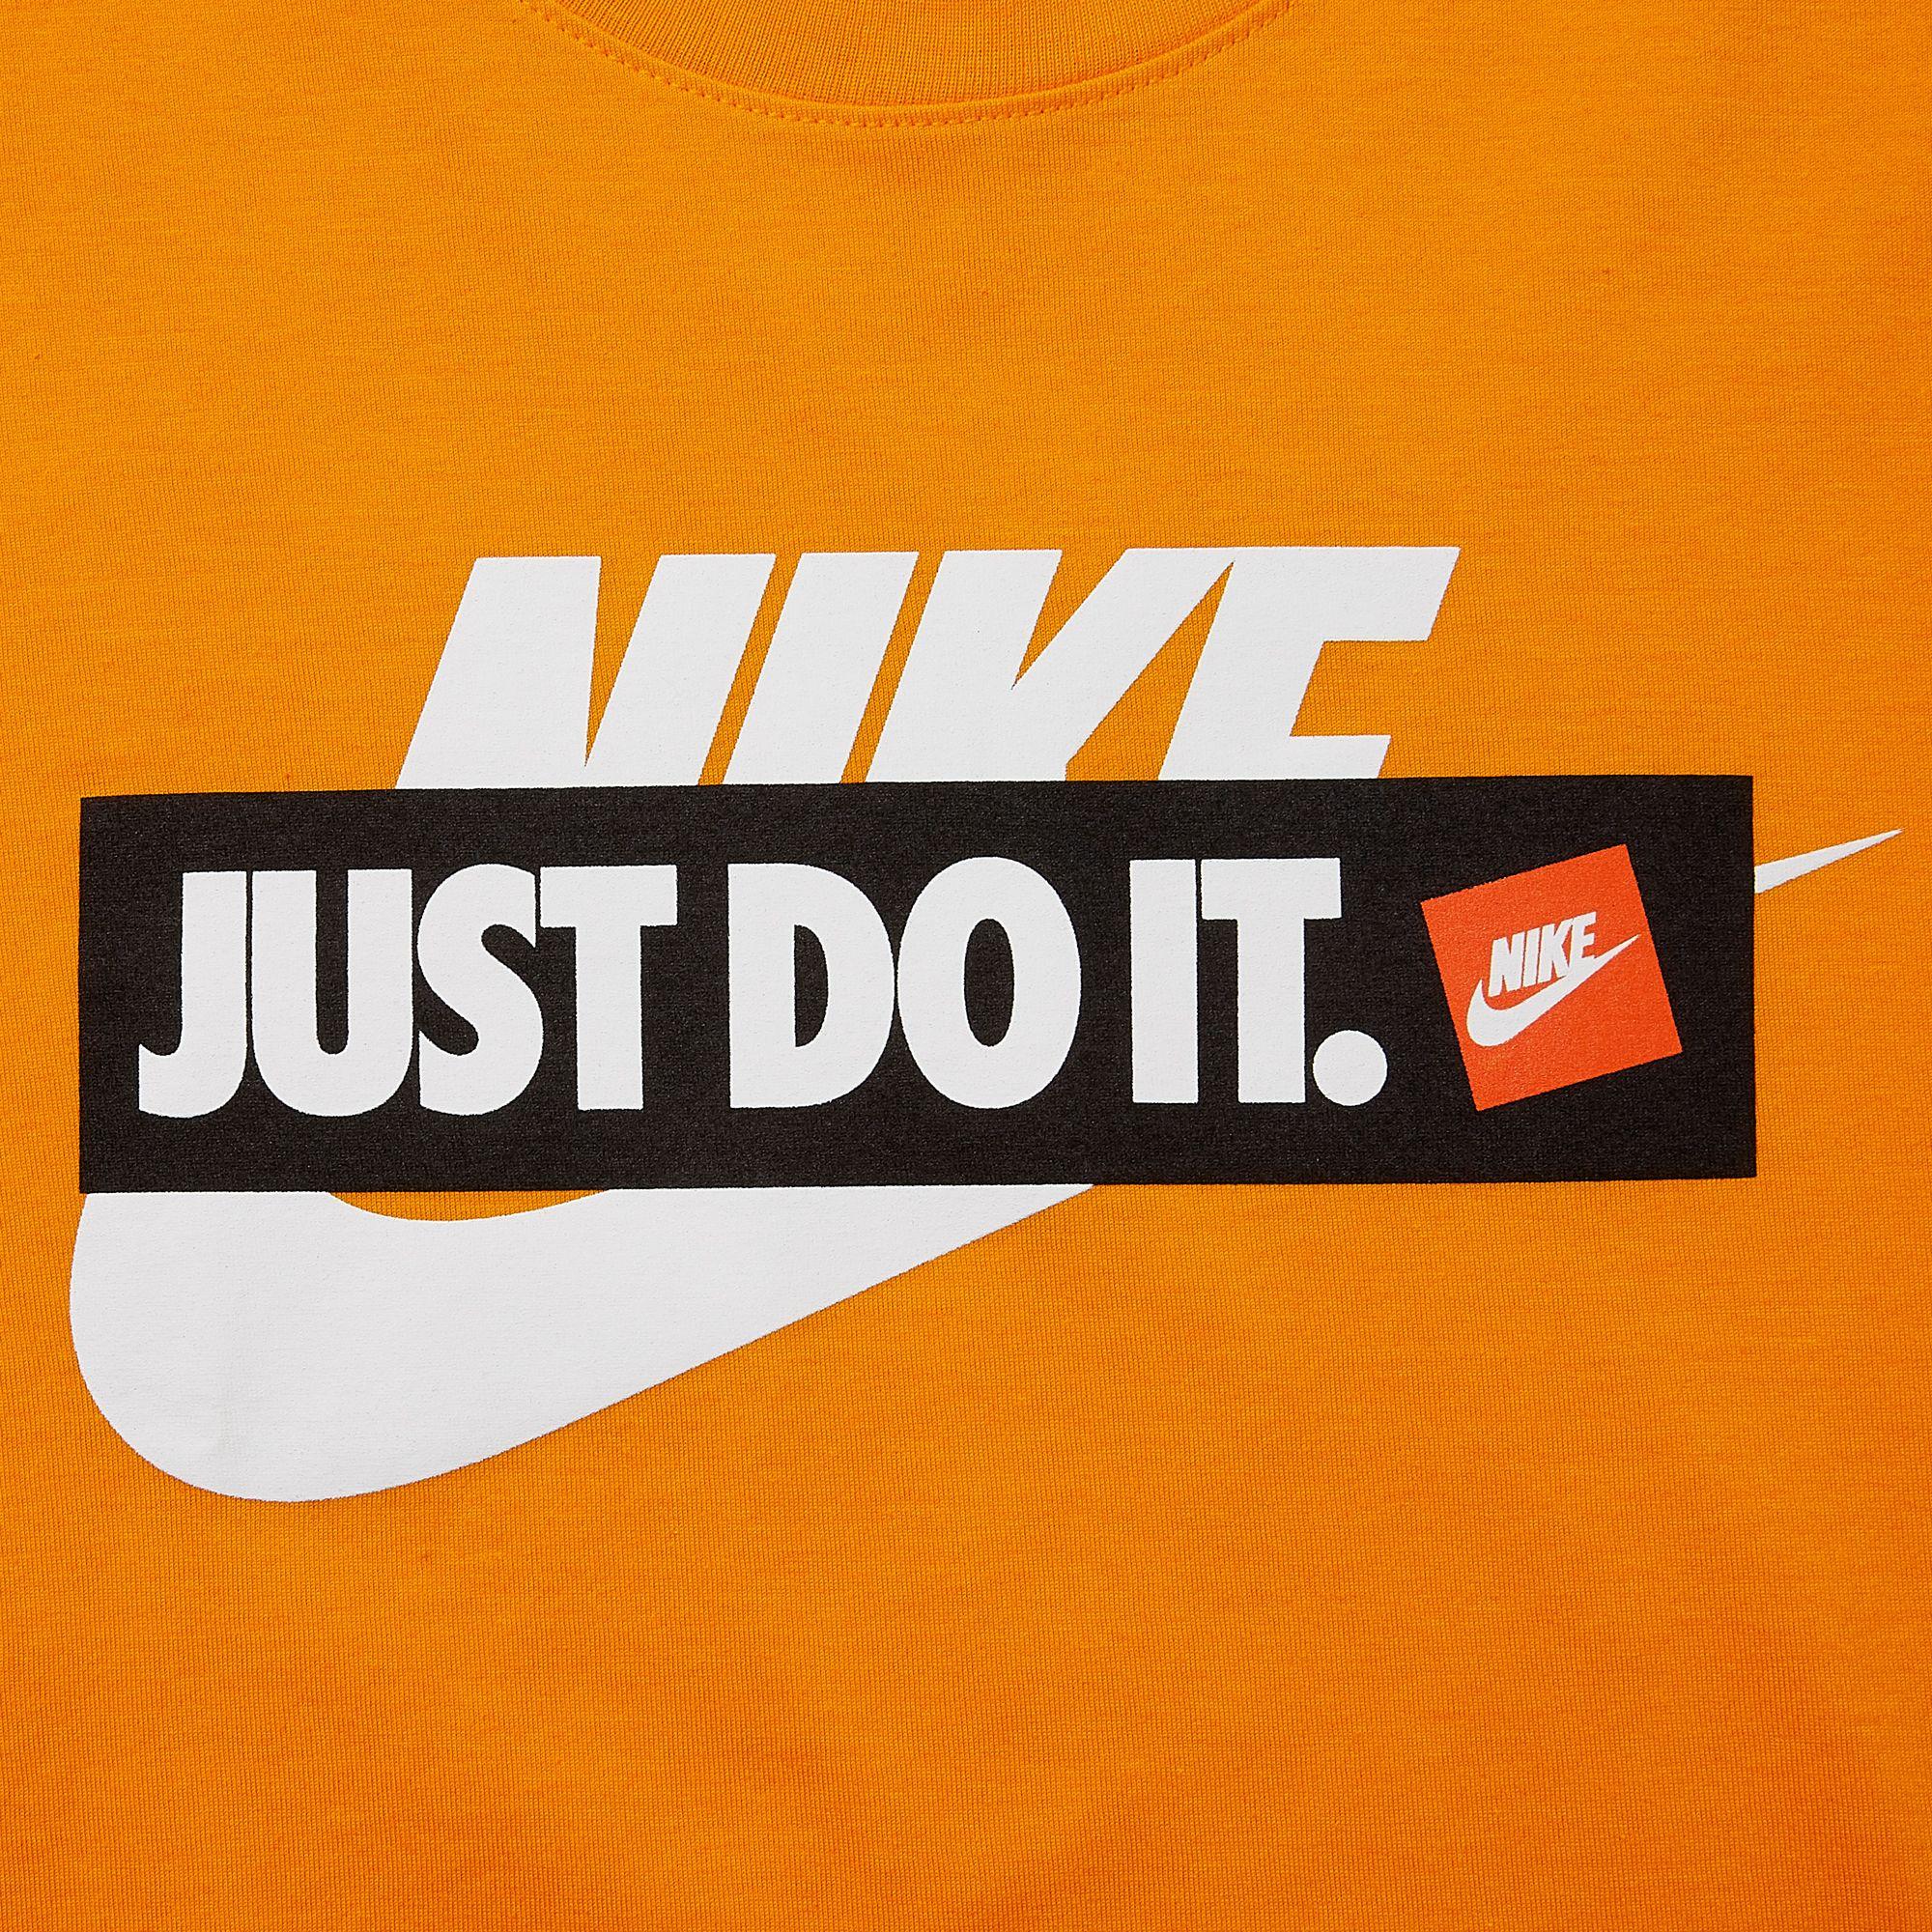 Nike Cotton Sportswear Just Do It Graphic Tee in Orange for Men - Lyst